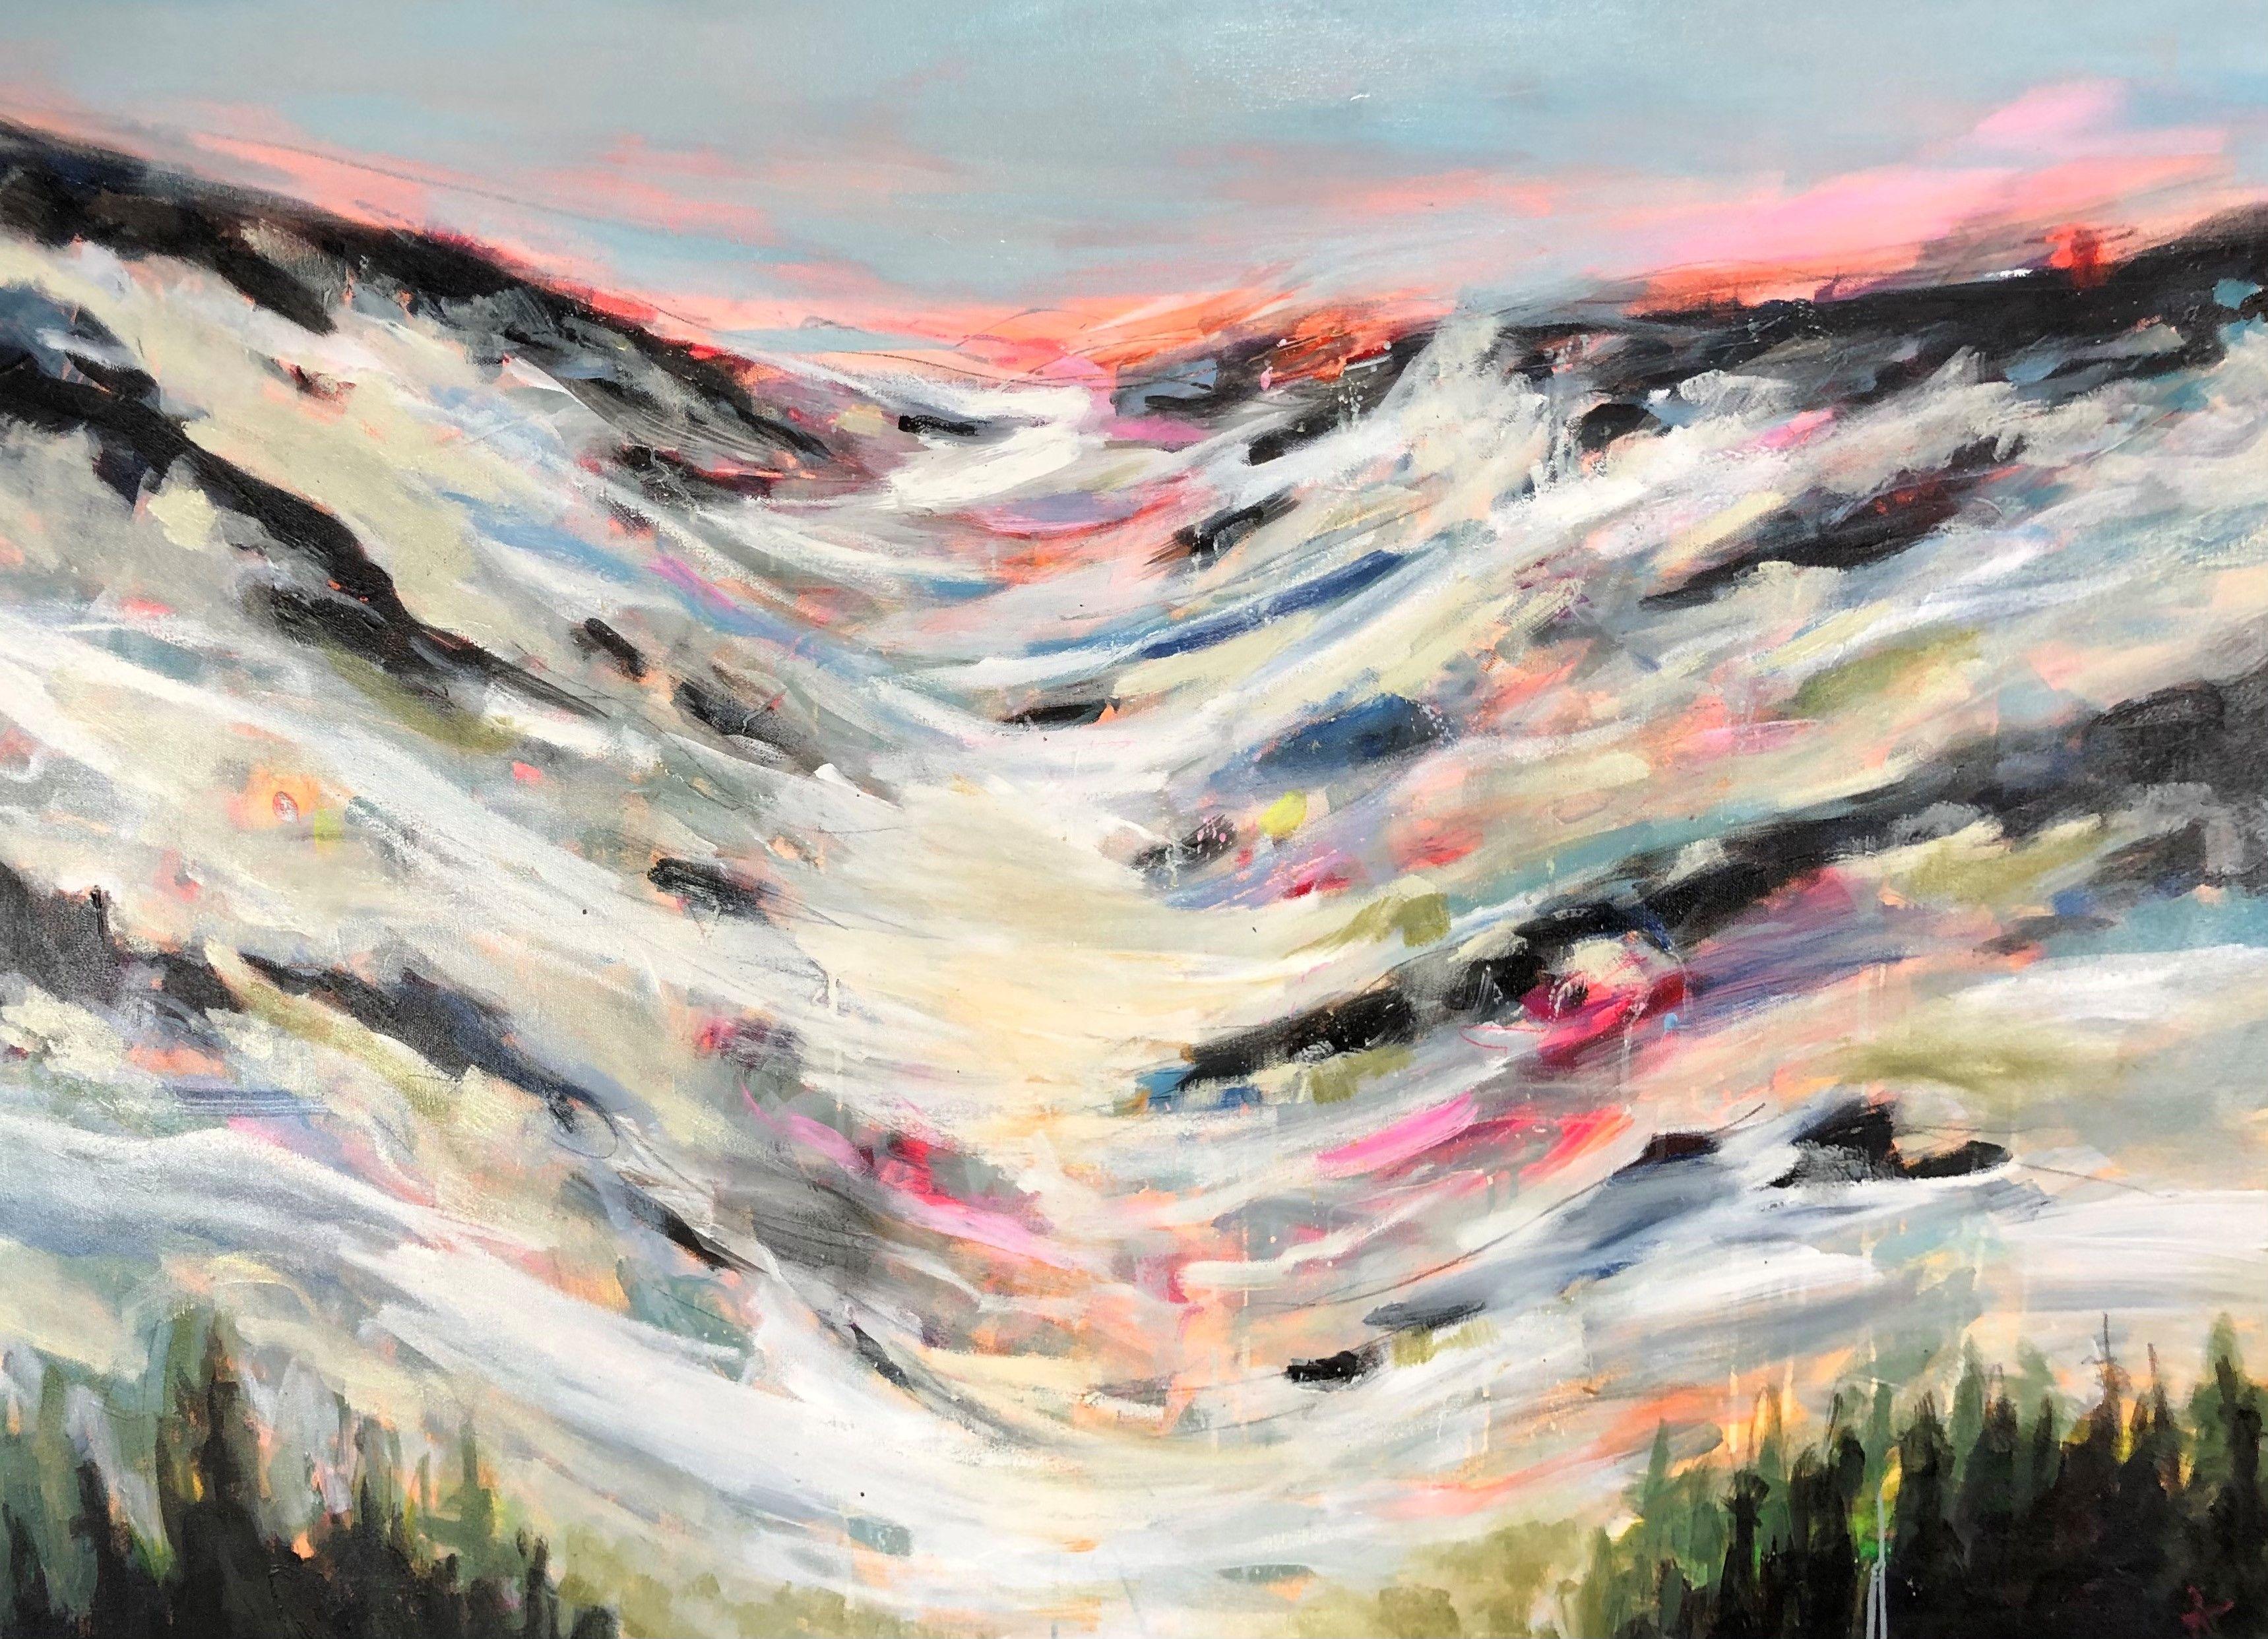 Rebecca Klementovich Landscape Painting – Tuckerman's Ravine, Gemälde, Öl auf Leinwand